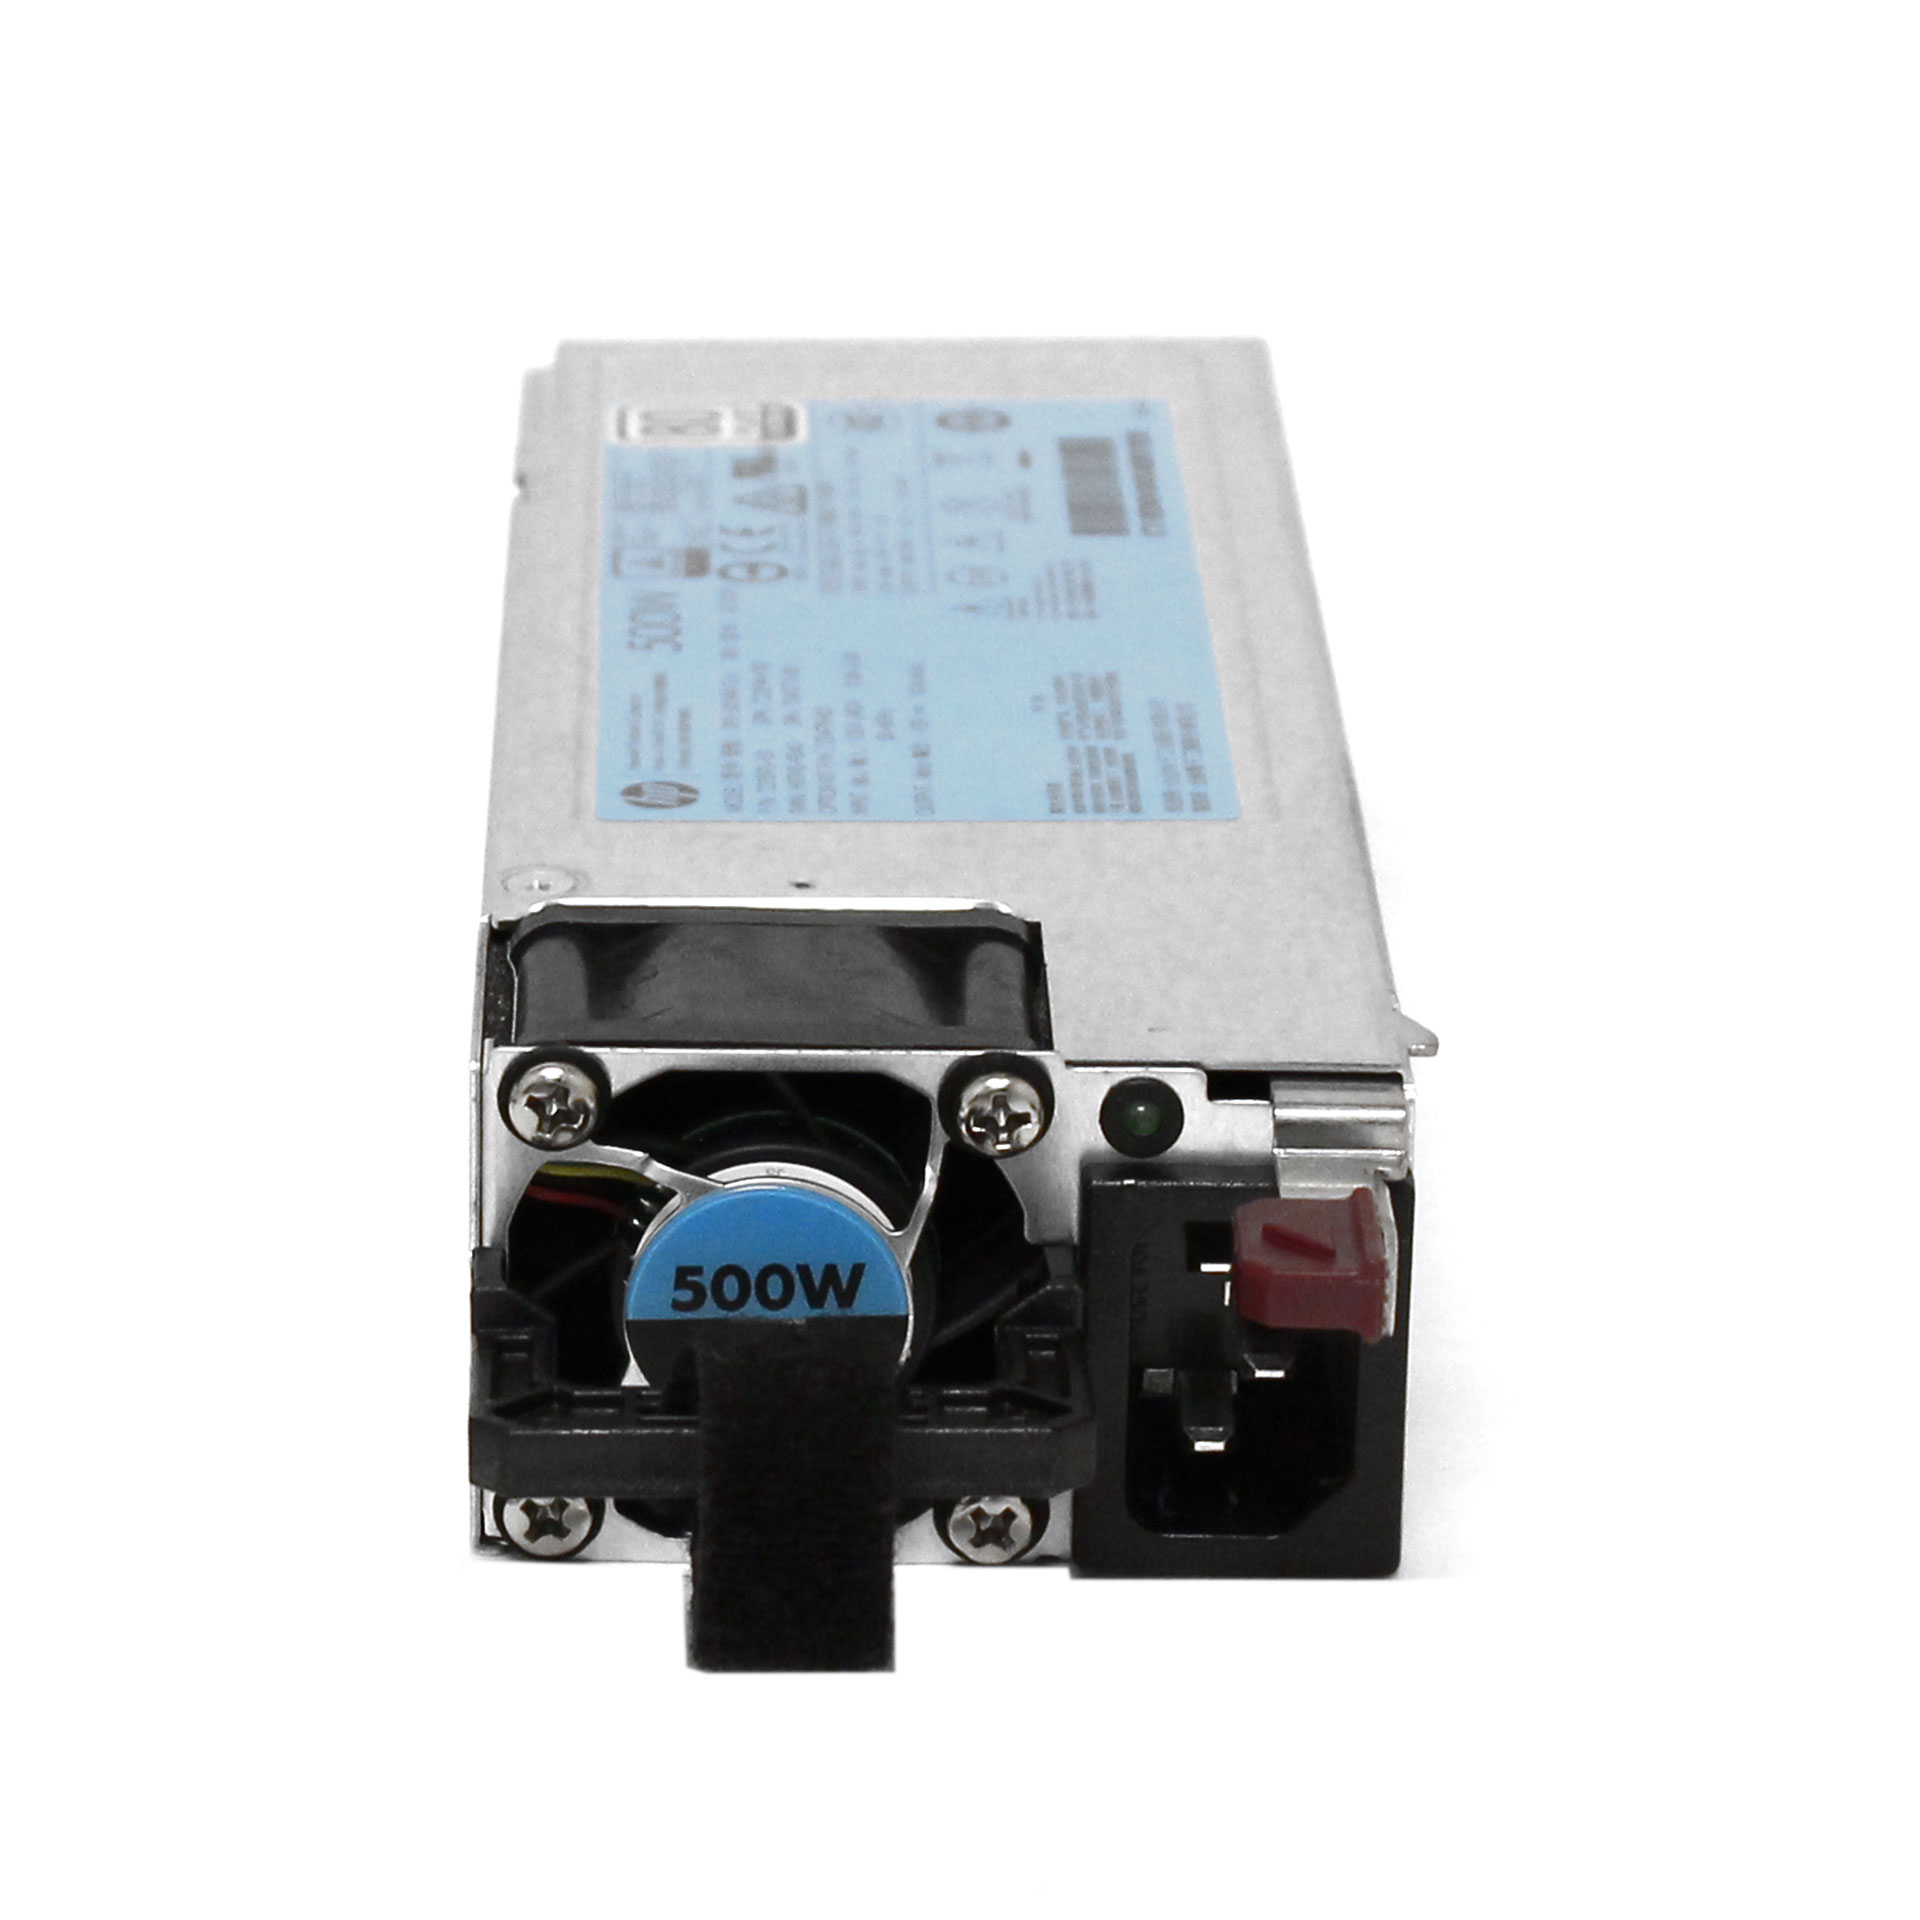 HP DPS-500AB-13 500W Flex Slot Platinum Power Supply 720478-B21